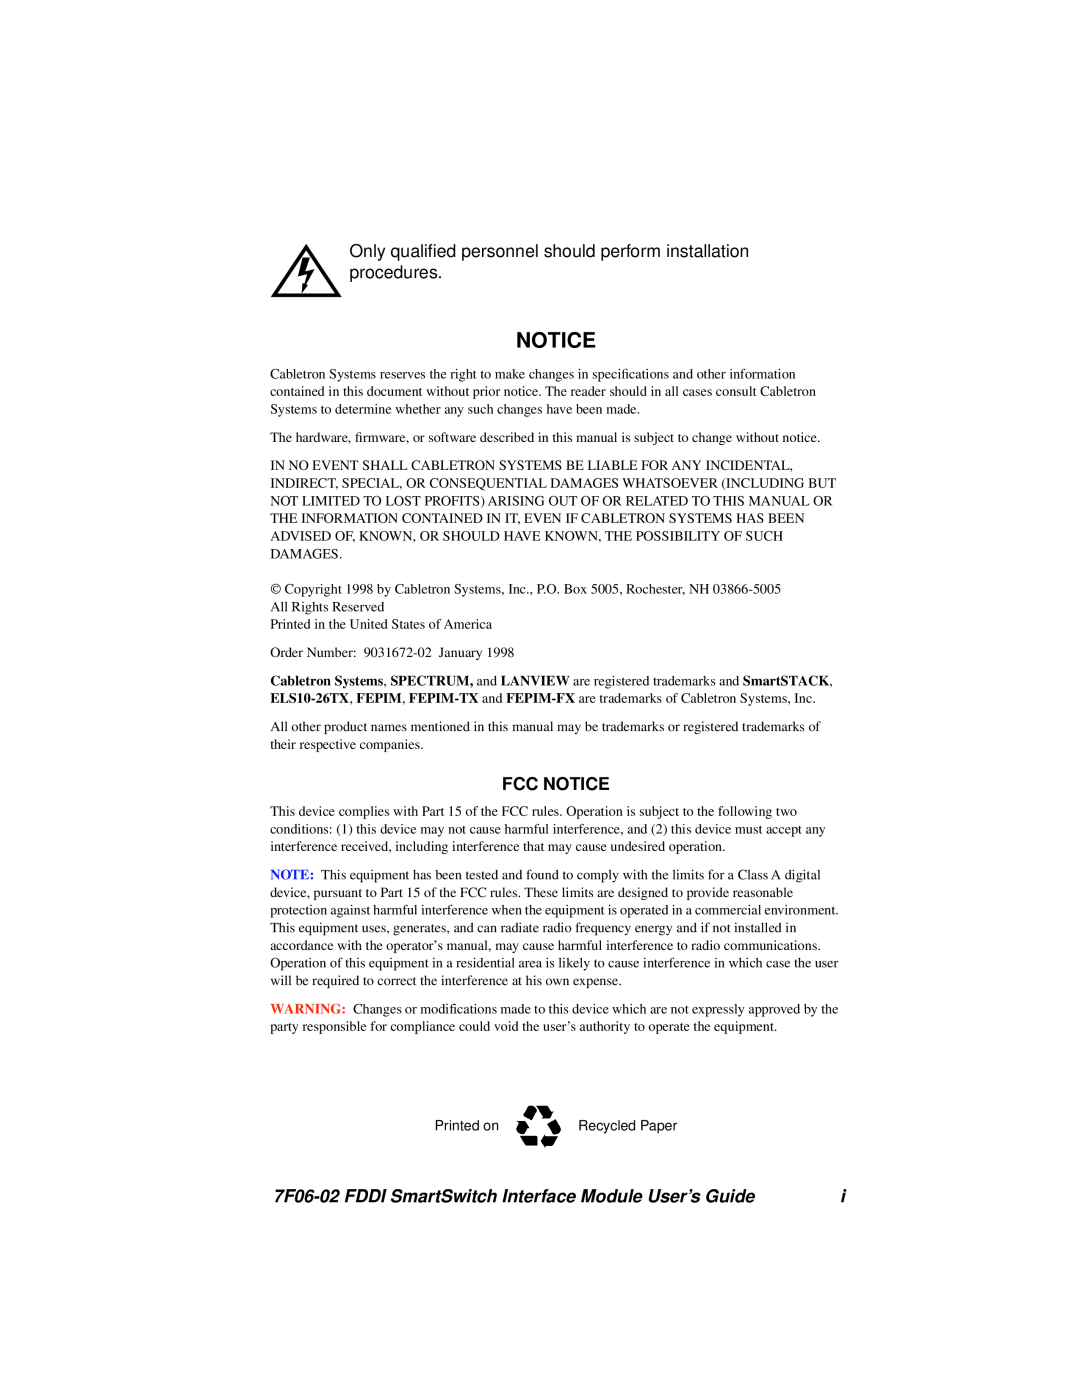 Cabletron Systems manual Fcc Notice, 7F06-02 FDDI SmartSwitch Interface Module User’s Guide 